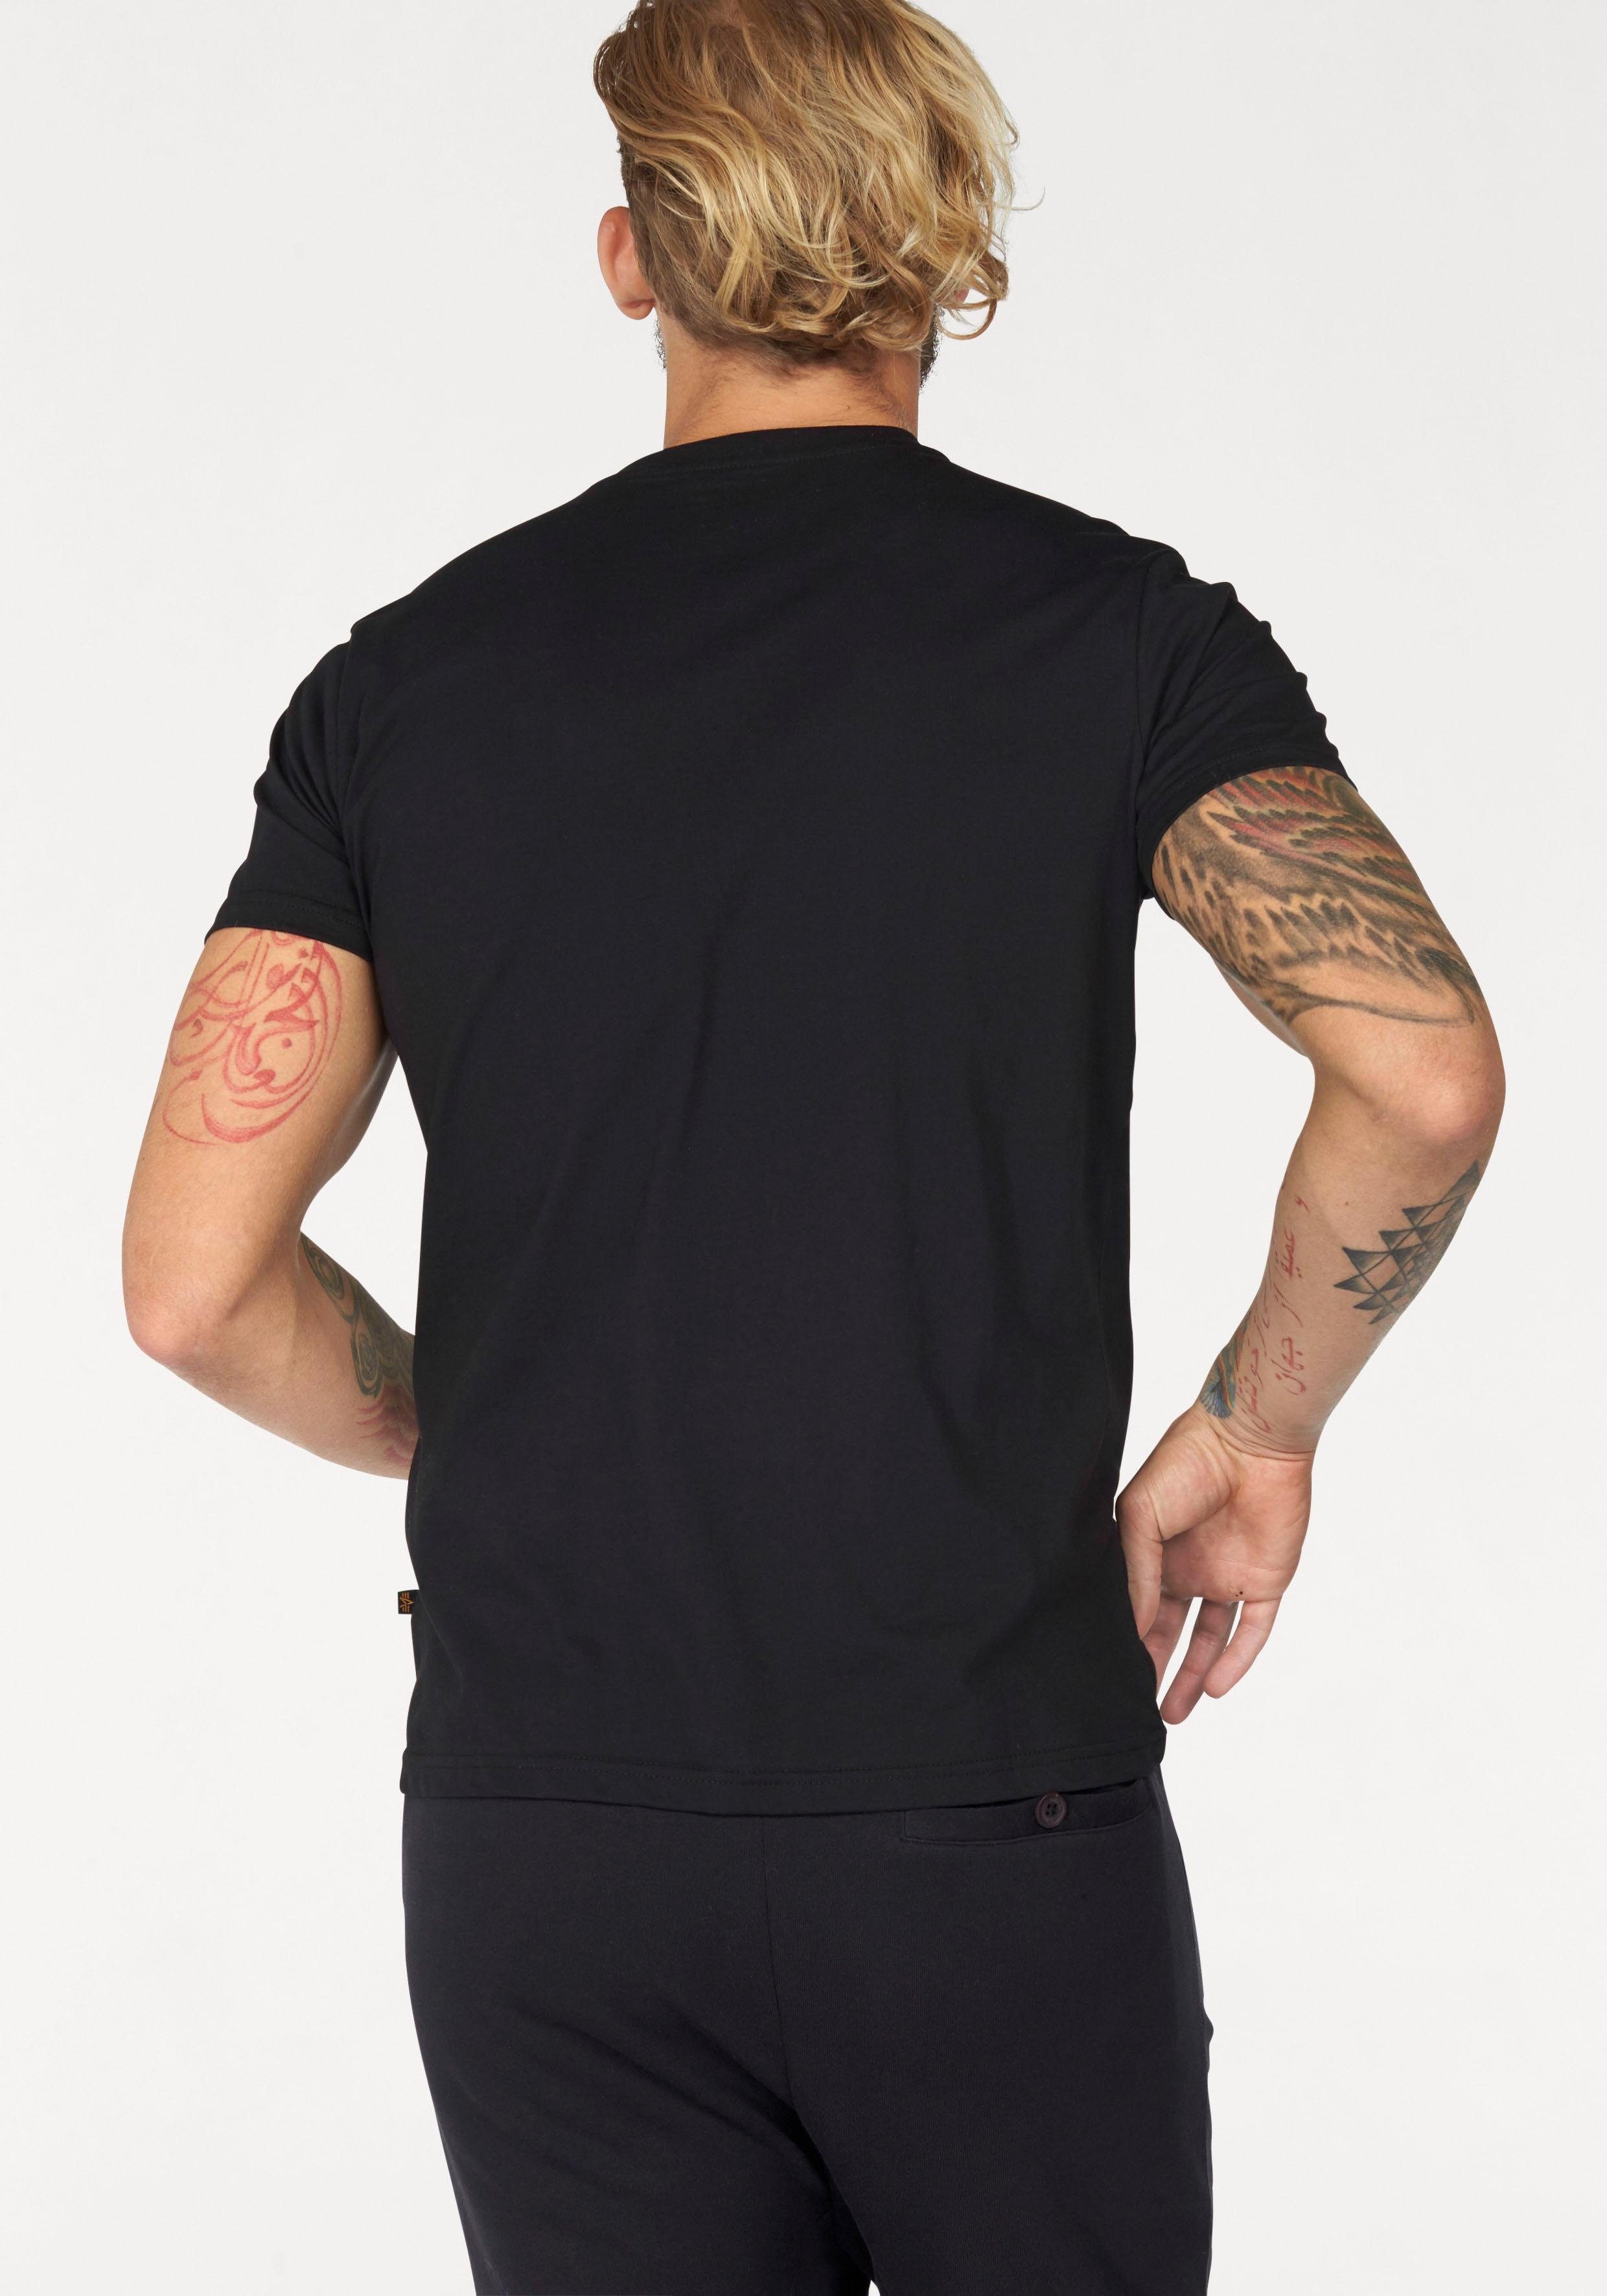 Alpha Industries T-Shirt Basic black-03 T-Shirt